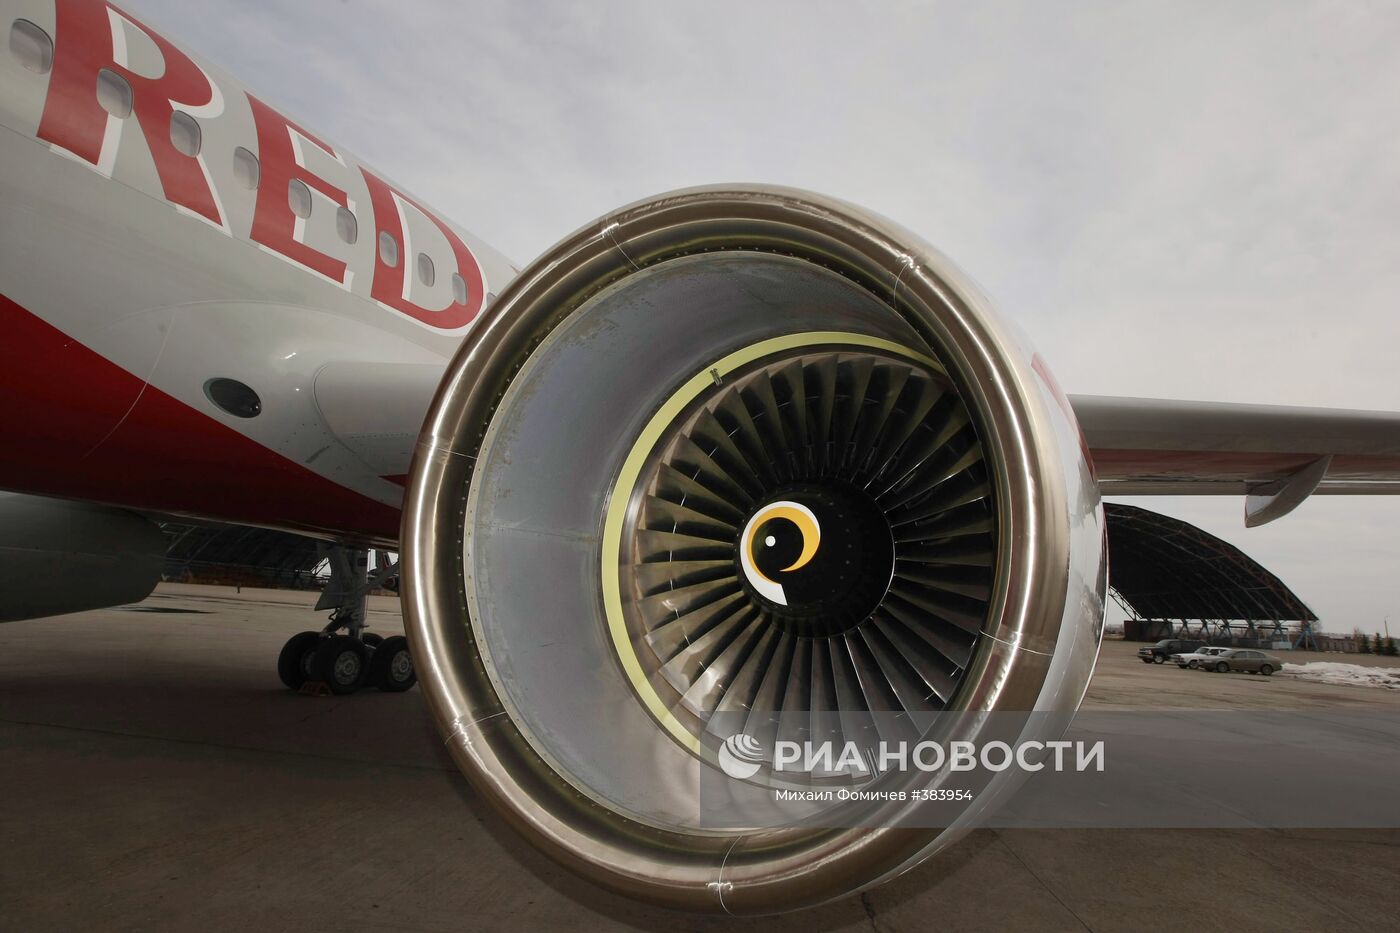 Самолет "Ту-204" передан авиакомпании Red Wings